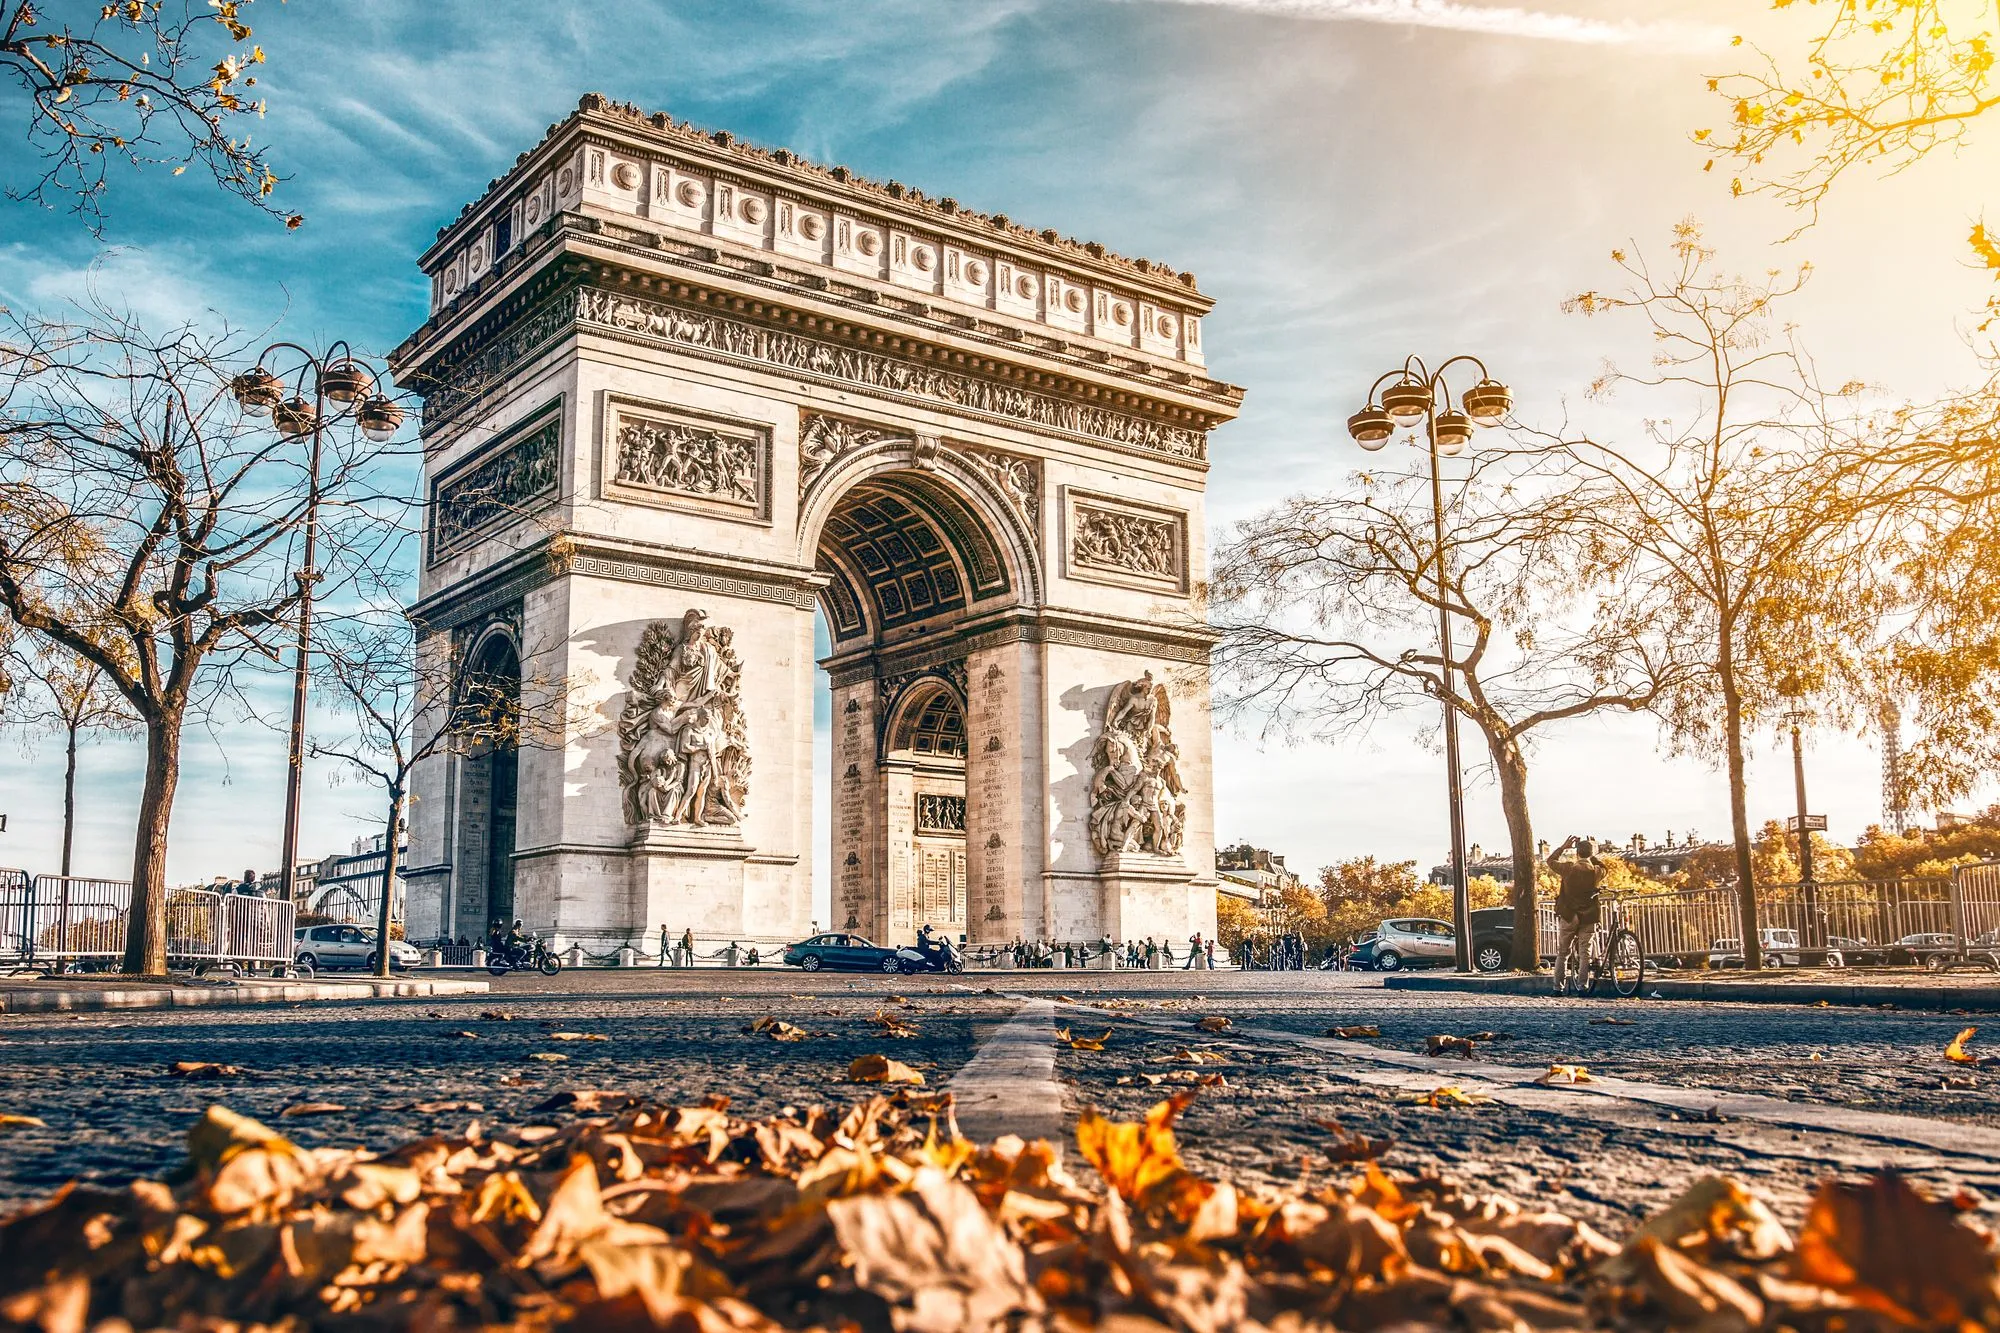 The Arc de Triomphe: A Monumental Symbol of Paris